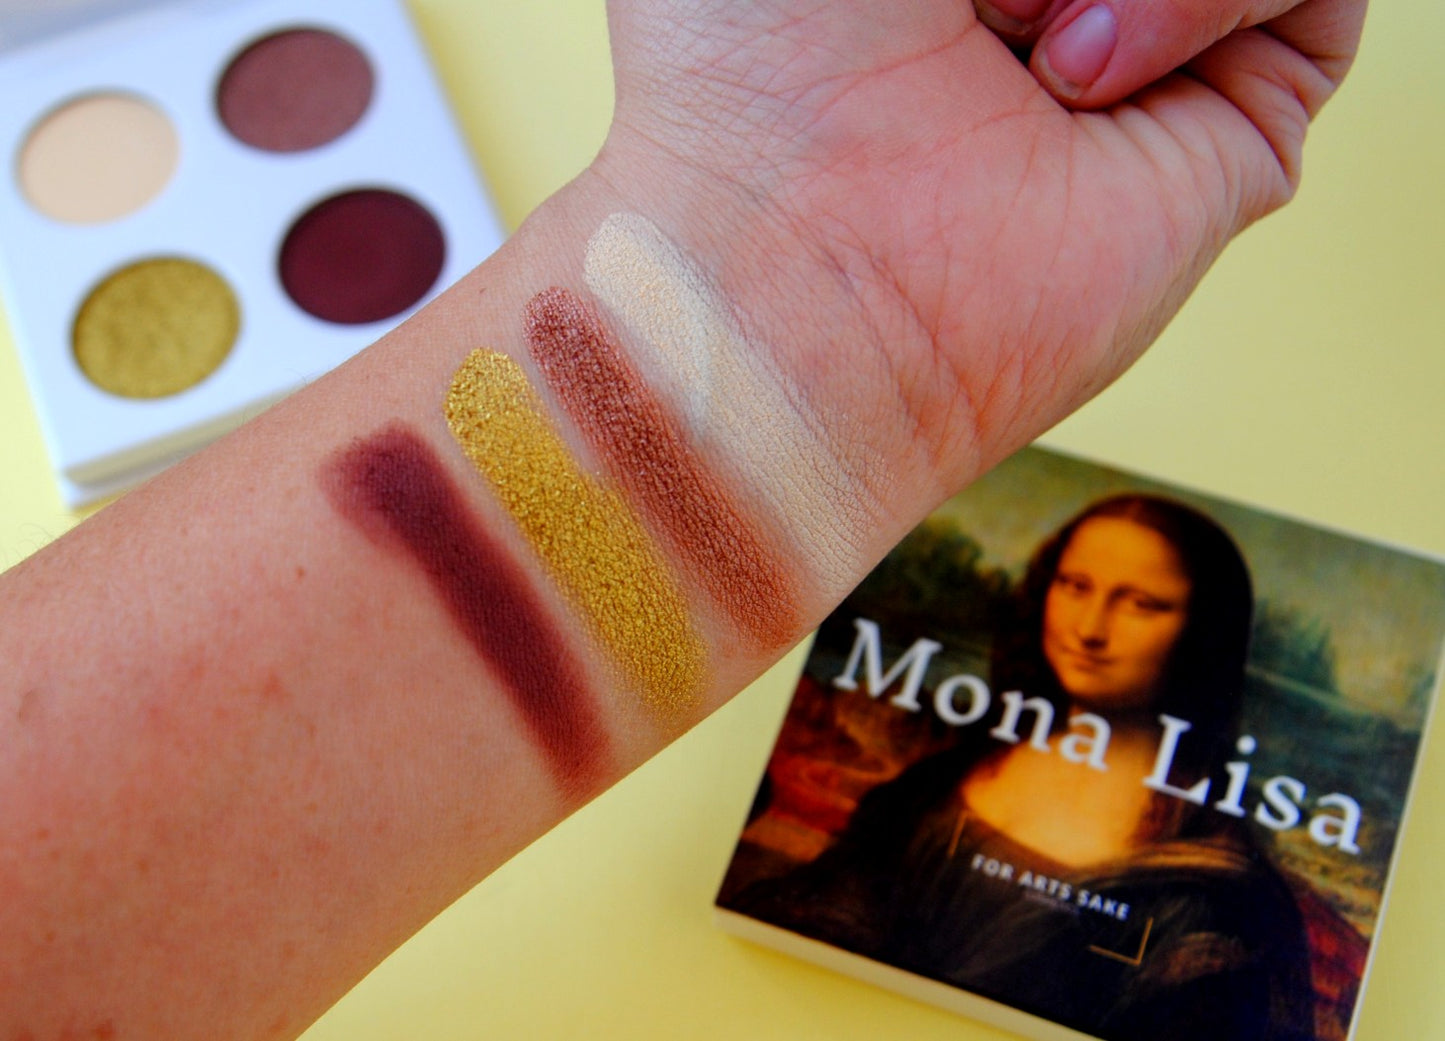 Mona Lisa Mini Eyeshadow Palette